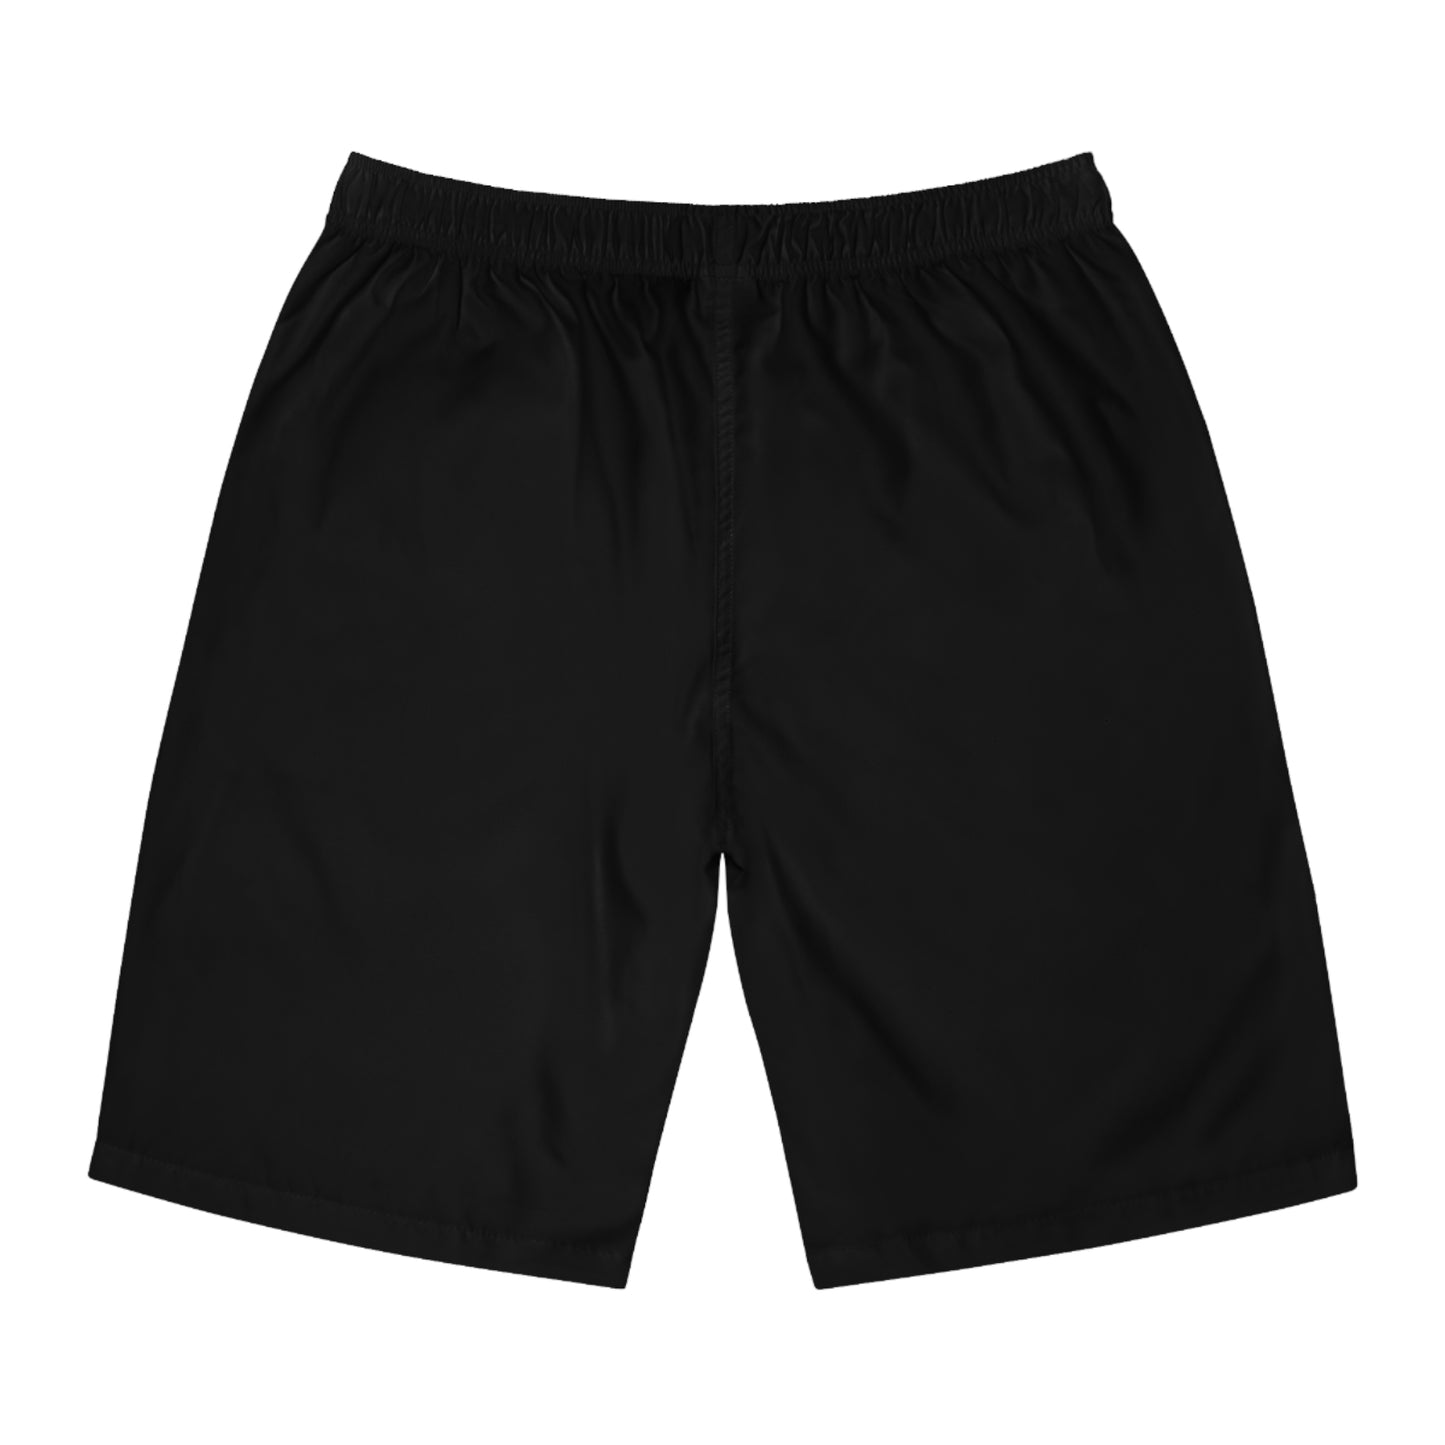 Jus' Athletics Men's Board Shorts With Polka Dot Pockets